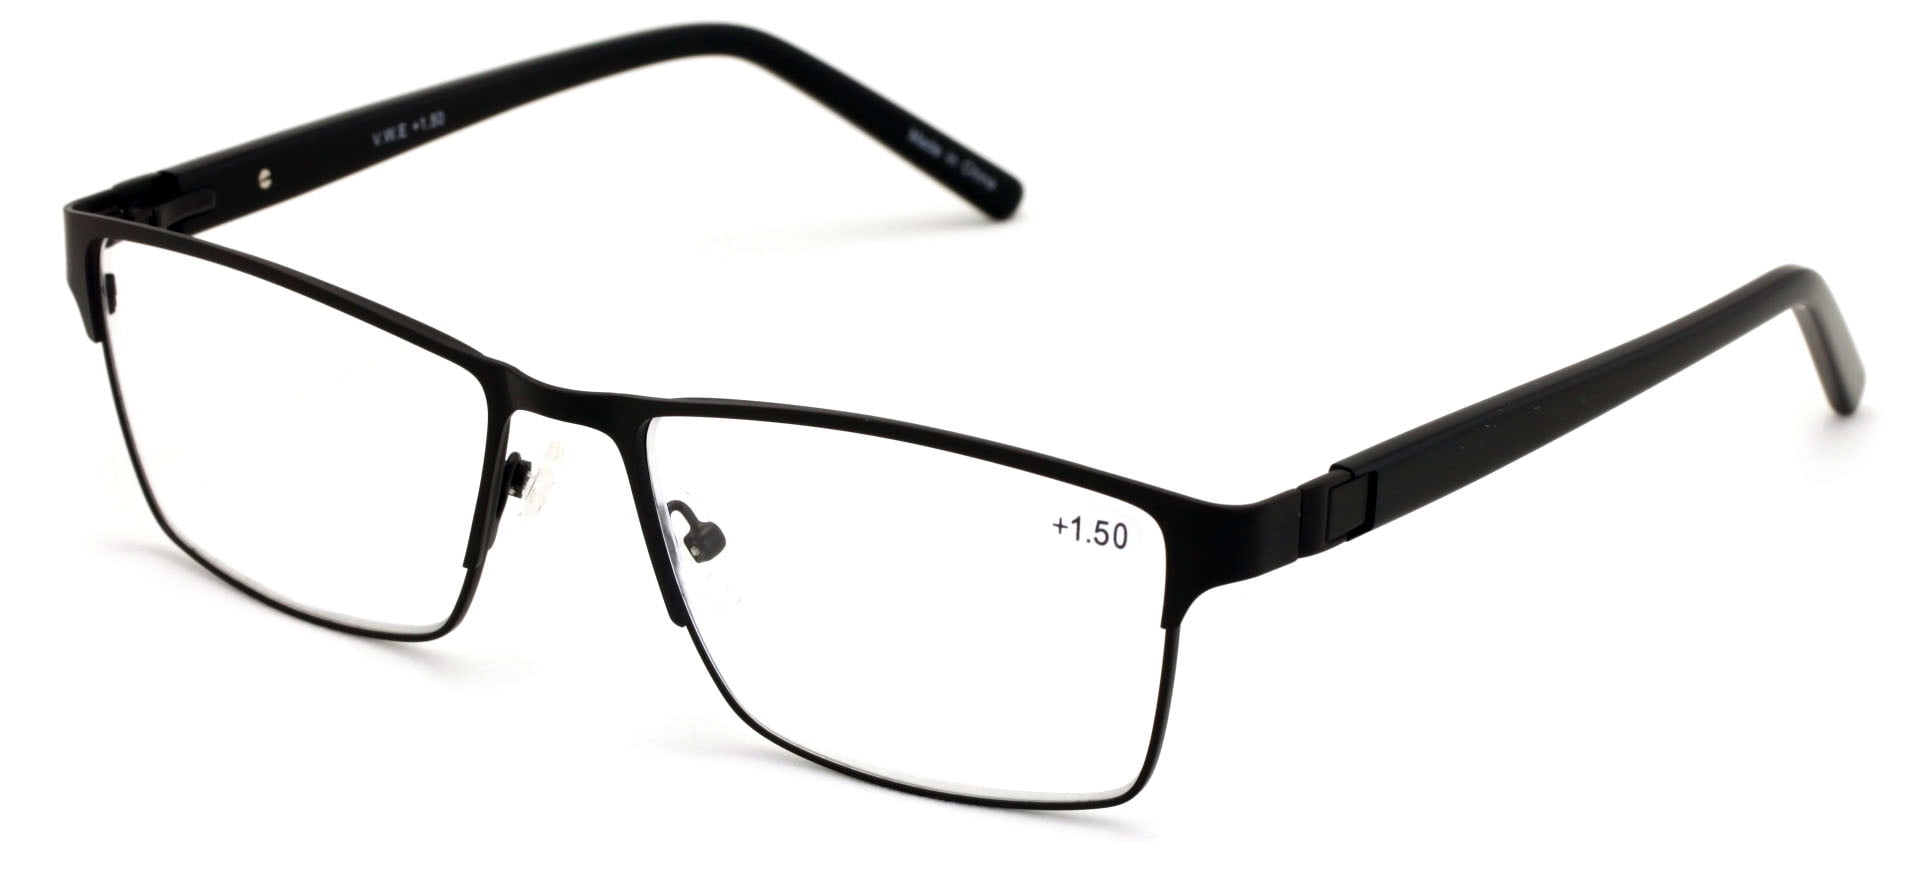 GEMSeven Round Myopia Glasses Metal Frames Optical Clear Lens Eyeglasses